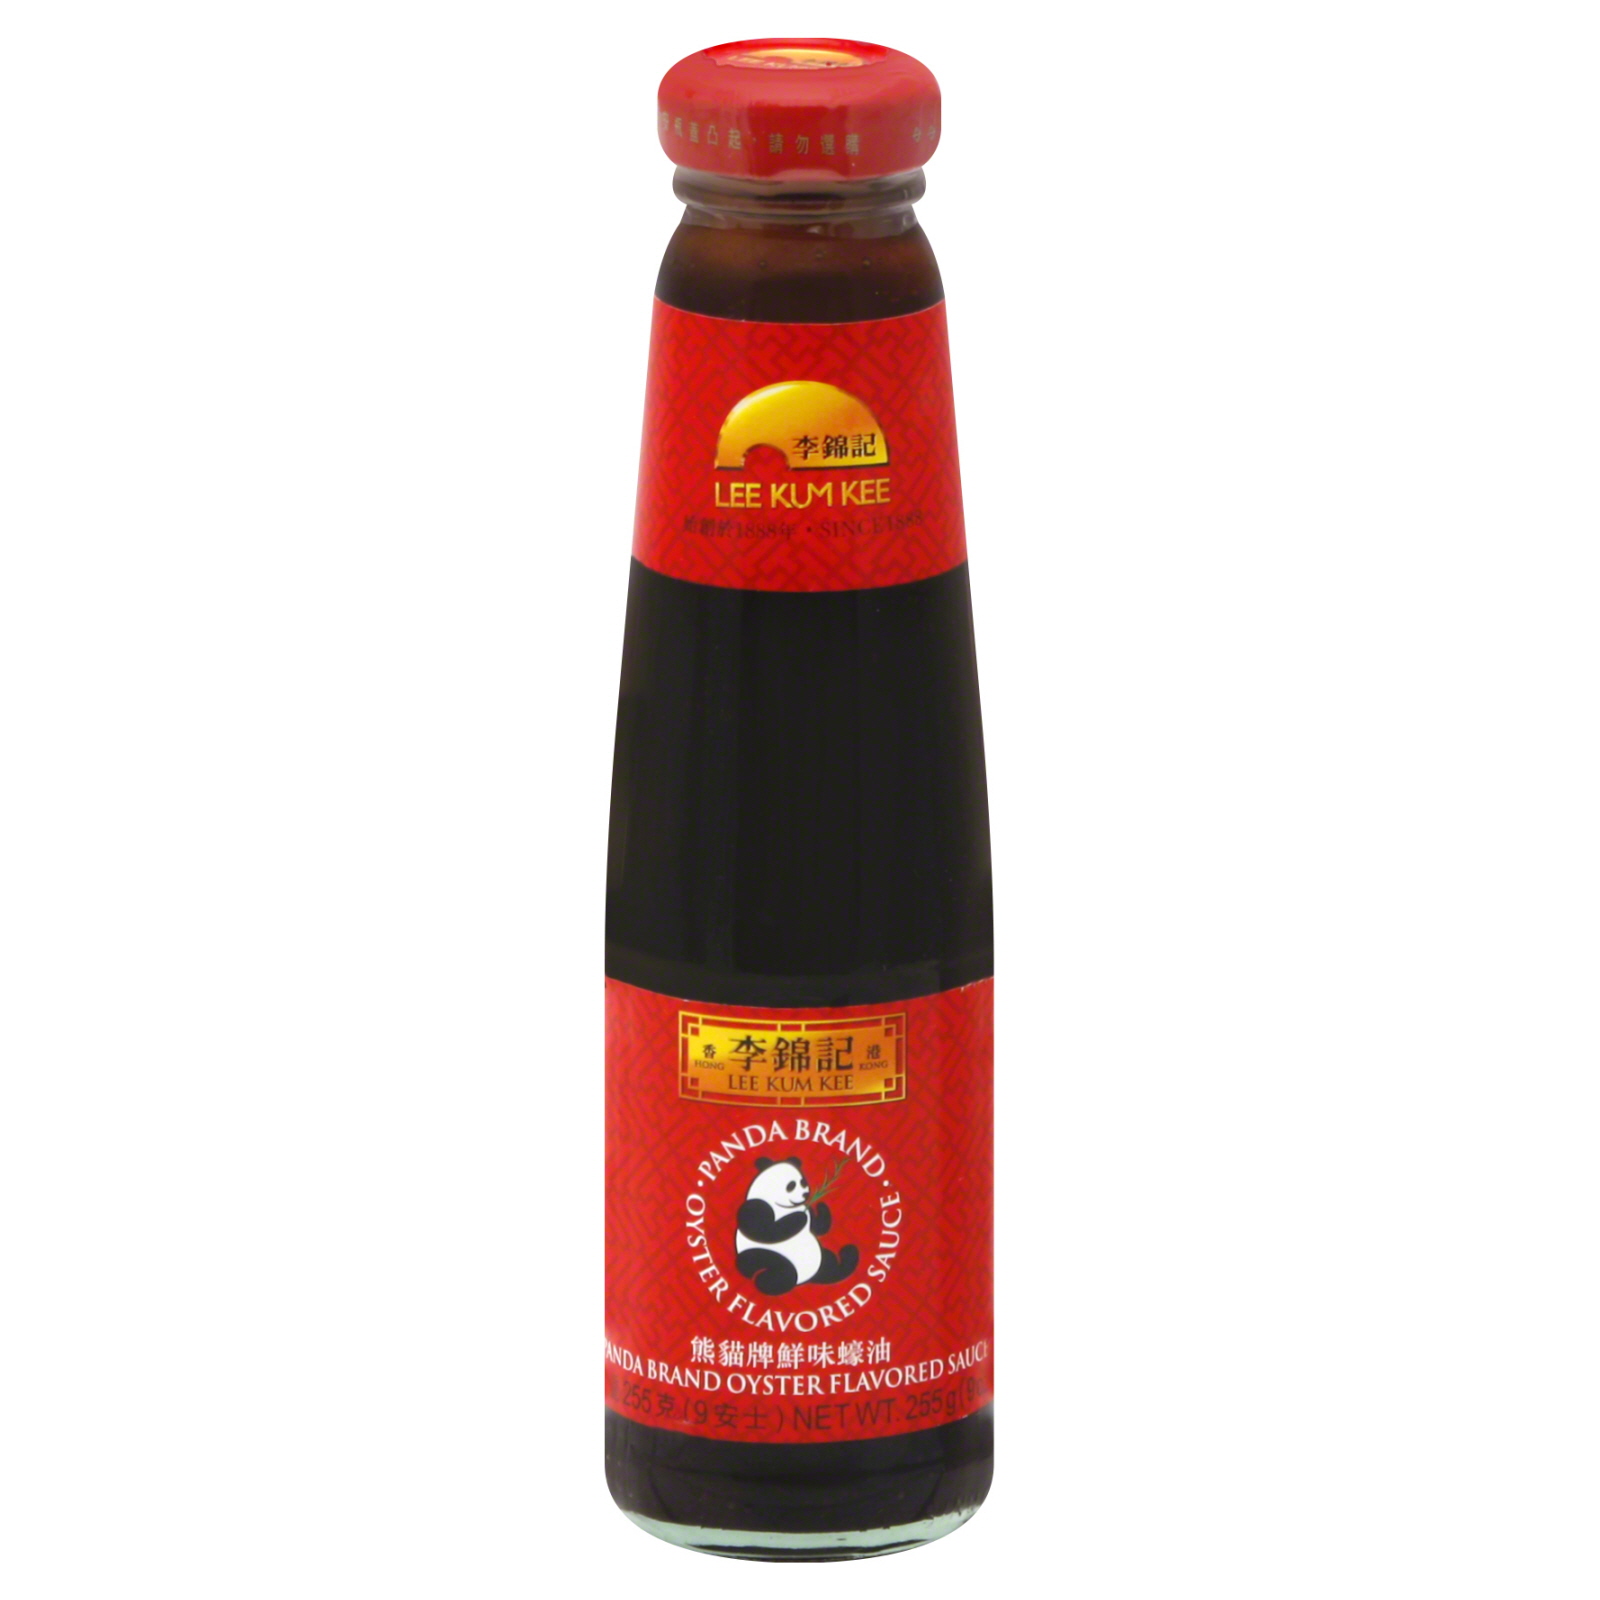 Lee Kum Kee Panda Brand Oyster Flavored Sauce, 9 oz (255 g) 207 ml